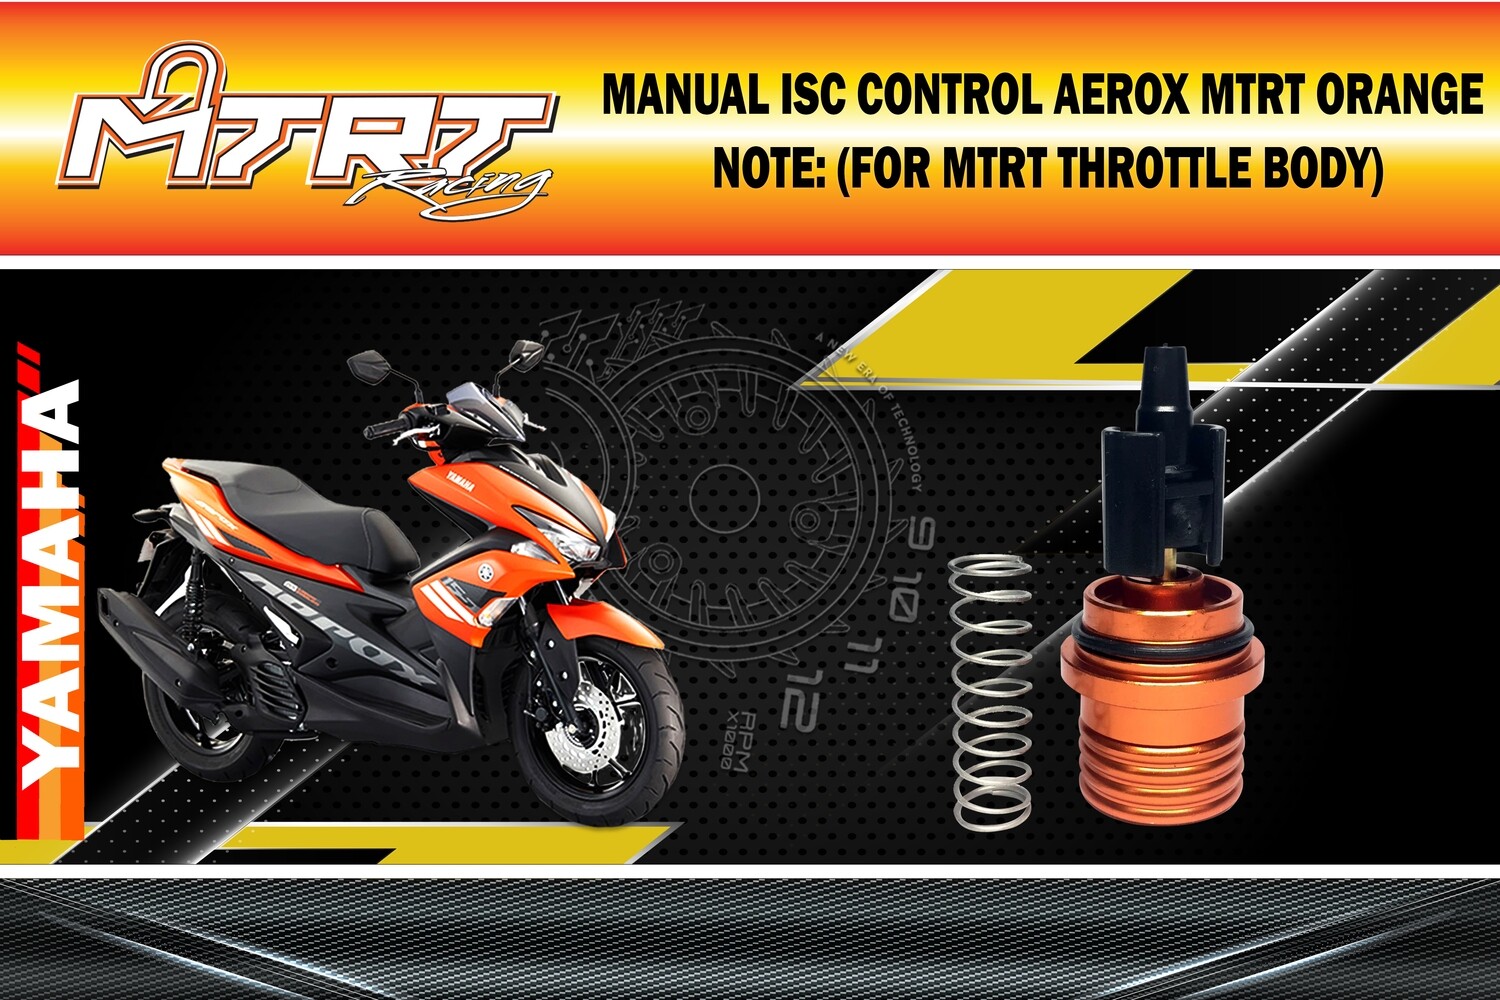 MANUAL ISC CONTROL AEROX MTRT ORANGE
NOTE: (FOR MTRT THROTTLE BODY)